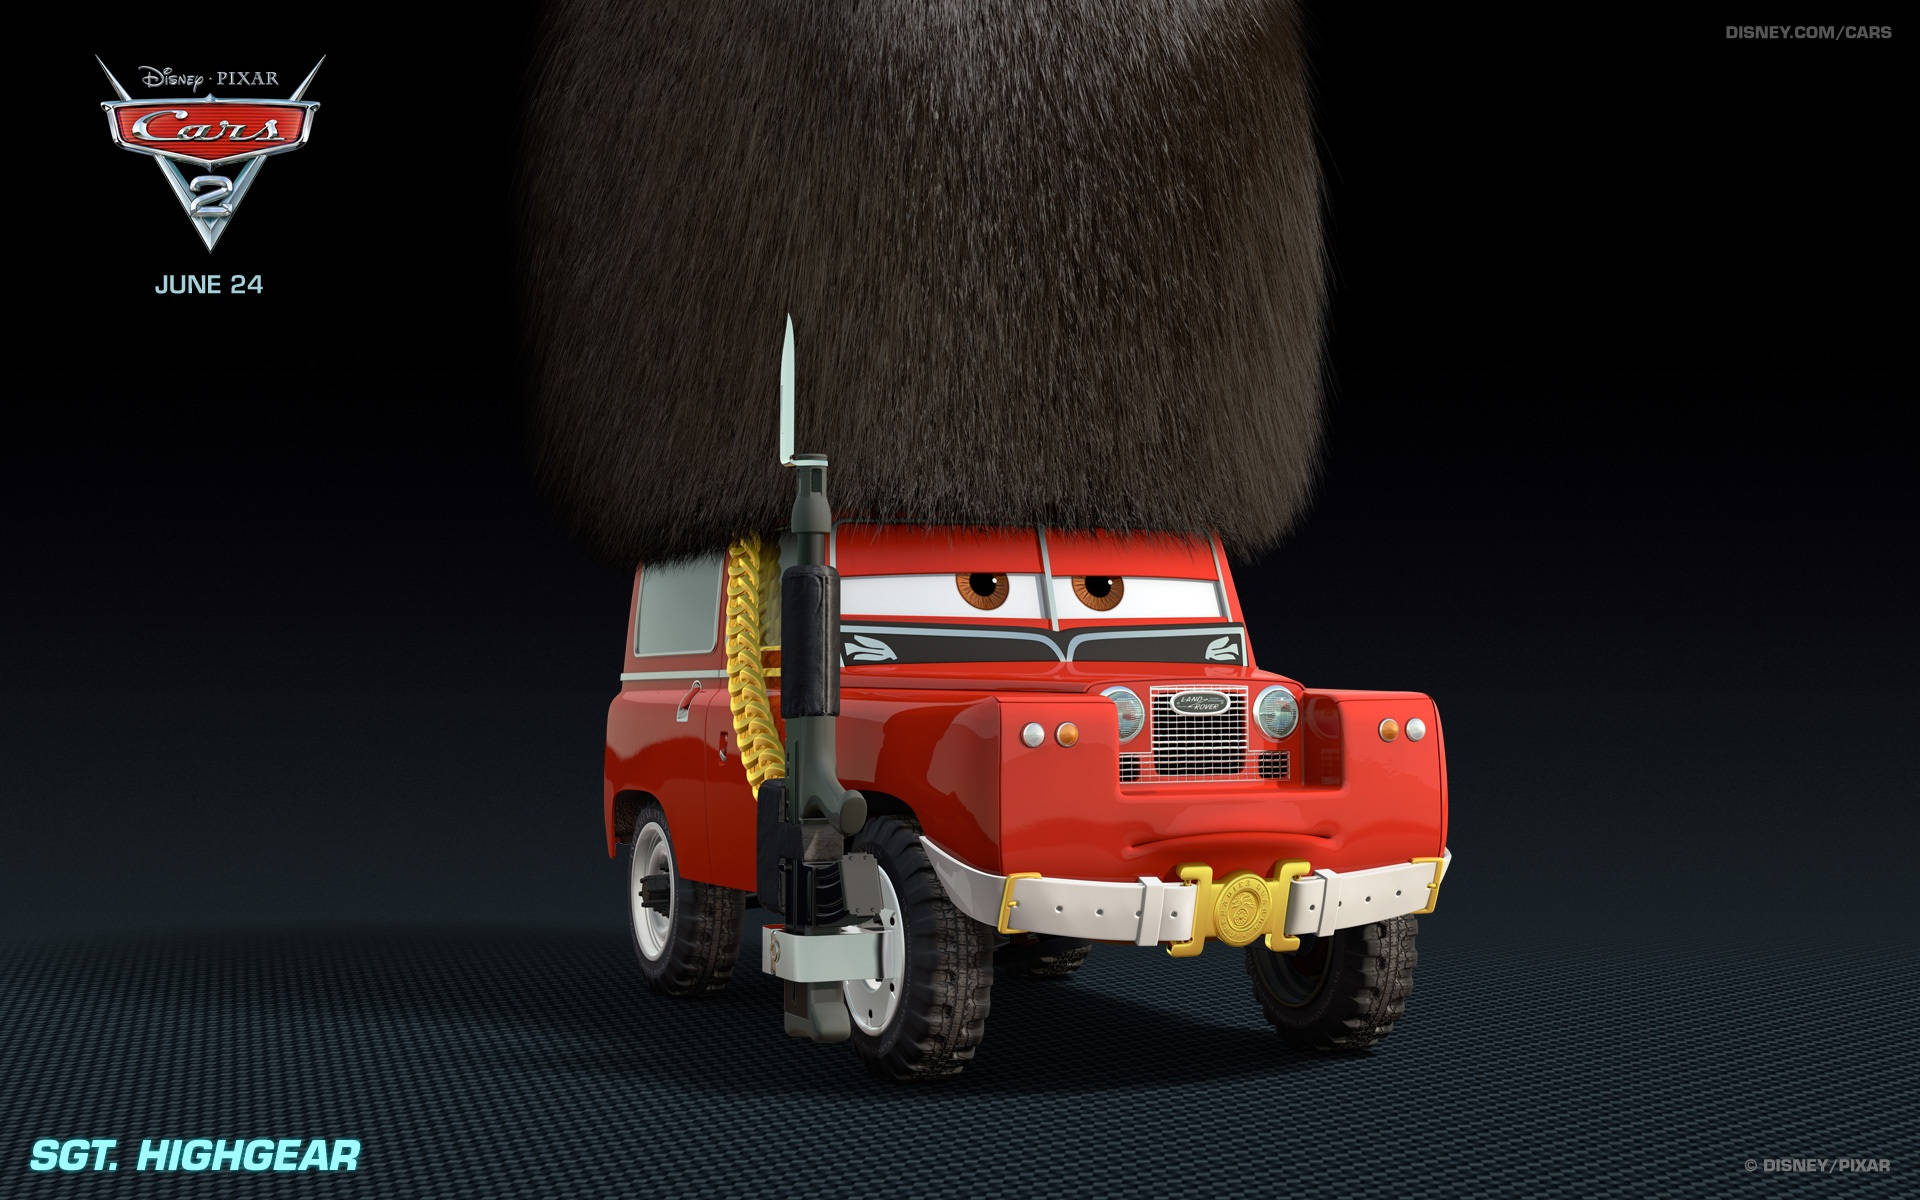 Disney Pixar Sgt. Highgear Cars 2 Wallpaper